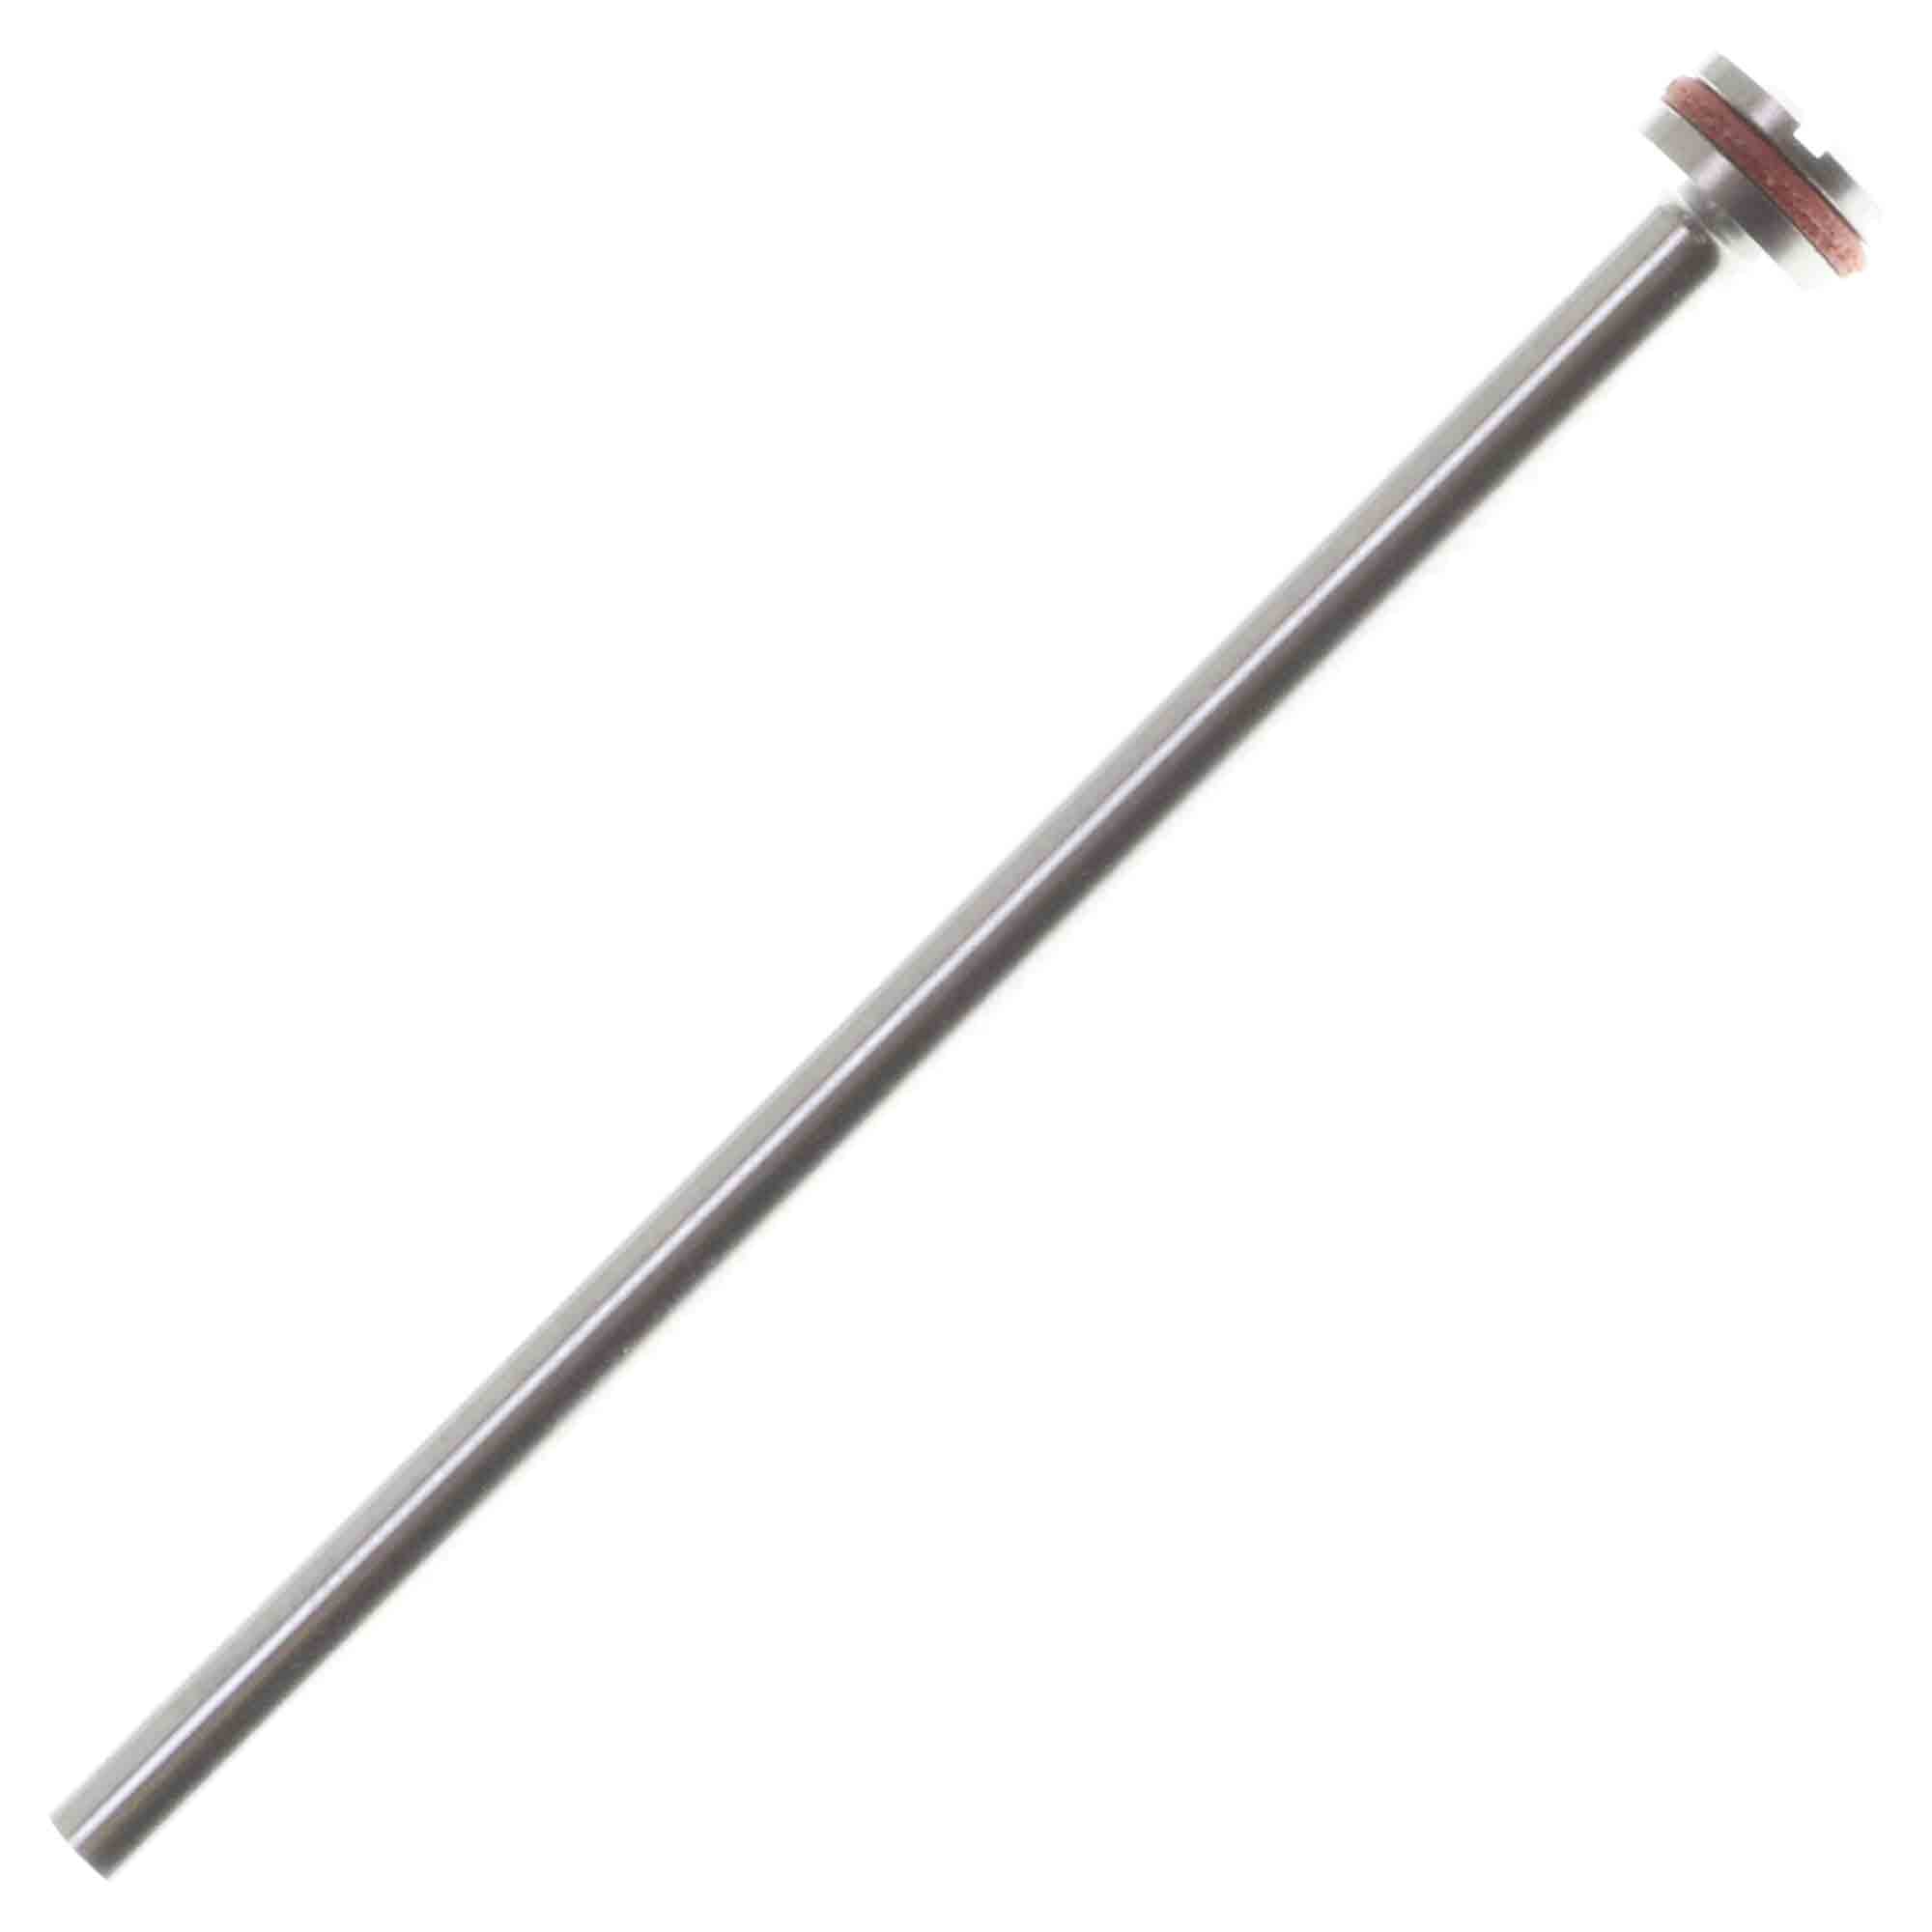 01.6mm - 1/16 inch Stainless Steel Screw Mandrel - Germany - 3/32 inch shank